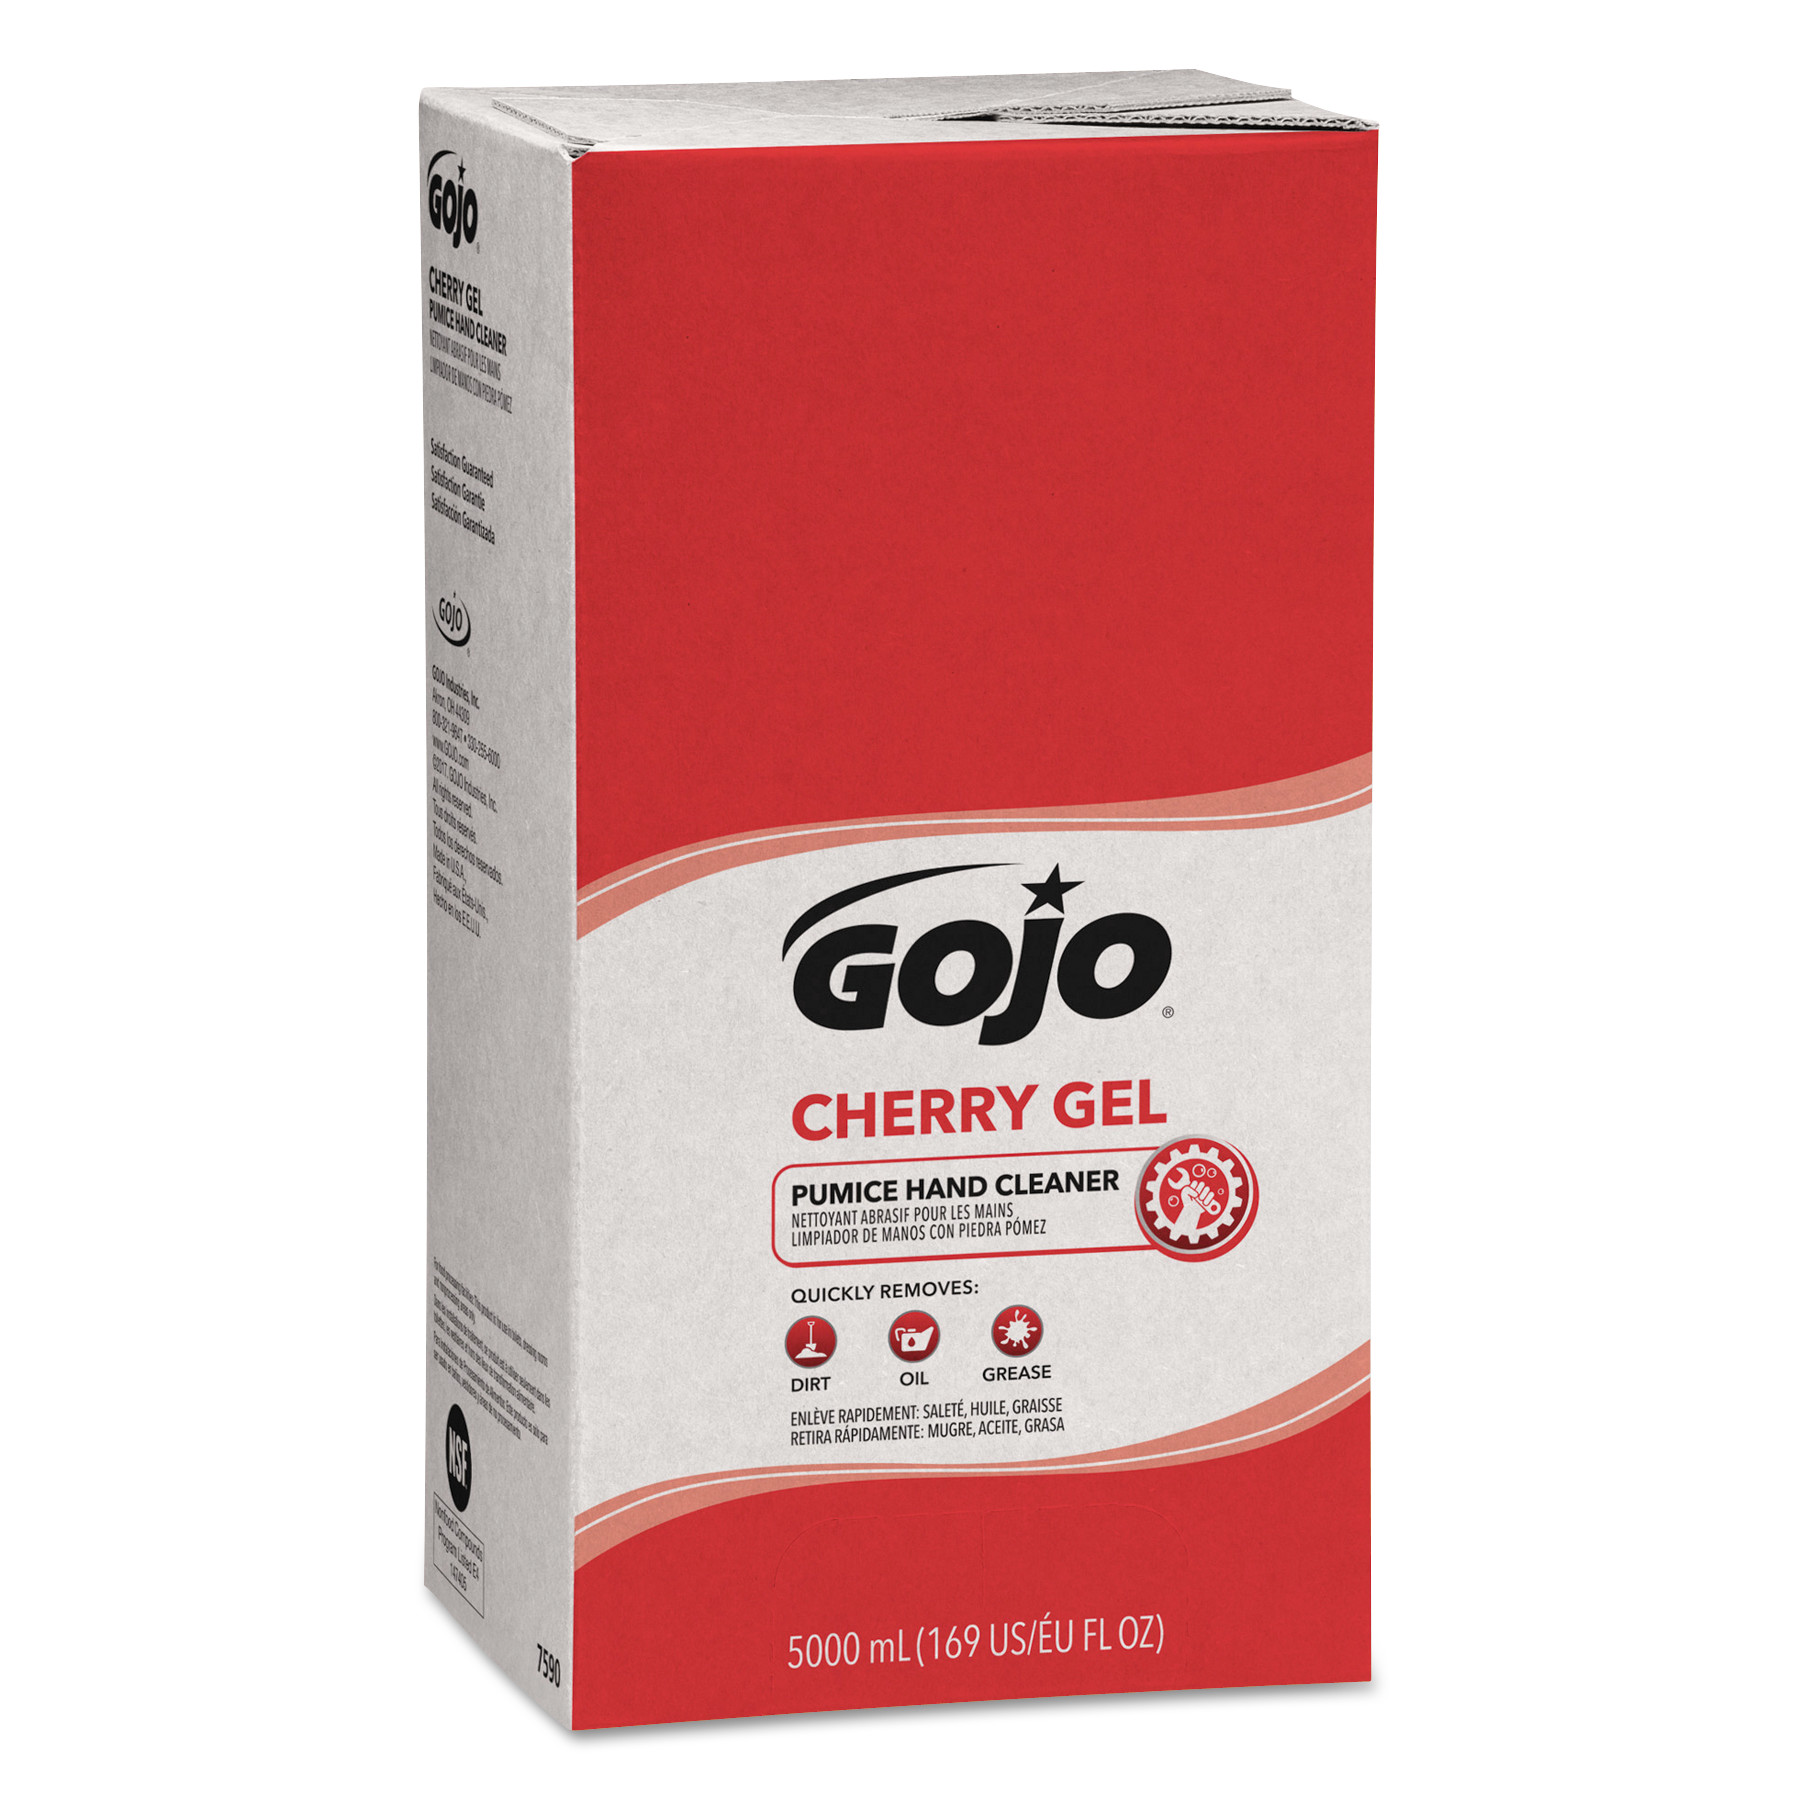  GOJO 7590-02 Cherry Gel Pumice Hand Cleaner, 5000 ml Refill, 2/Carton (GOJ759002) 